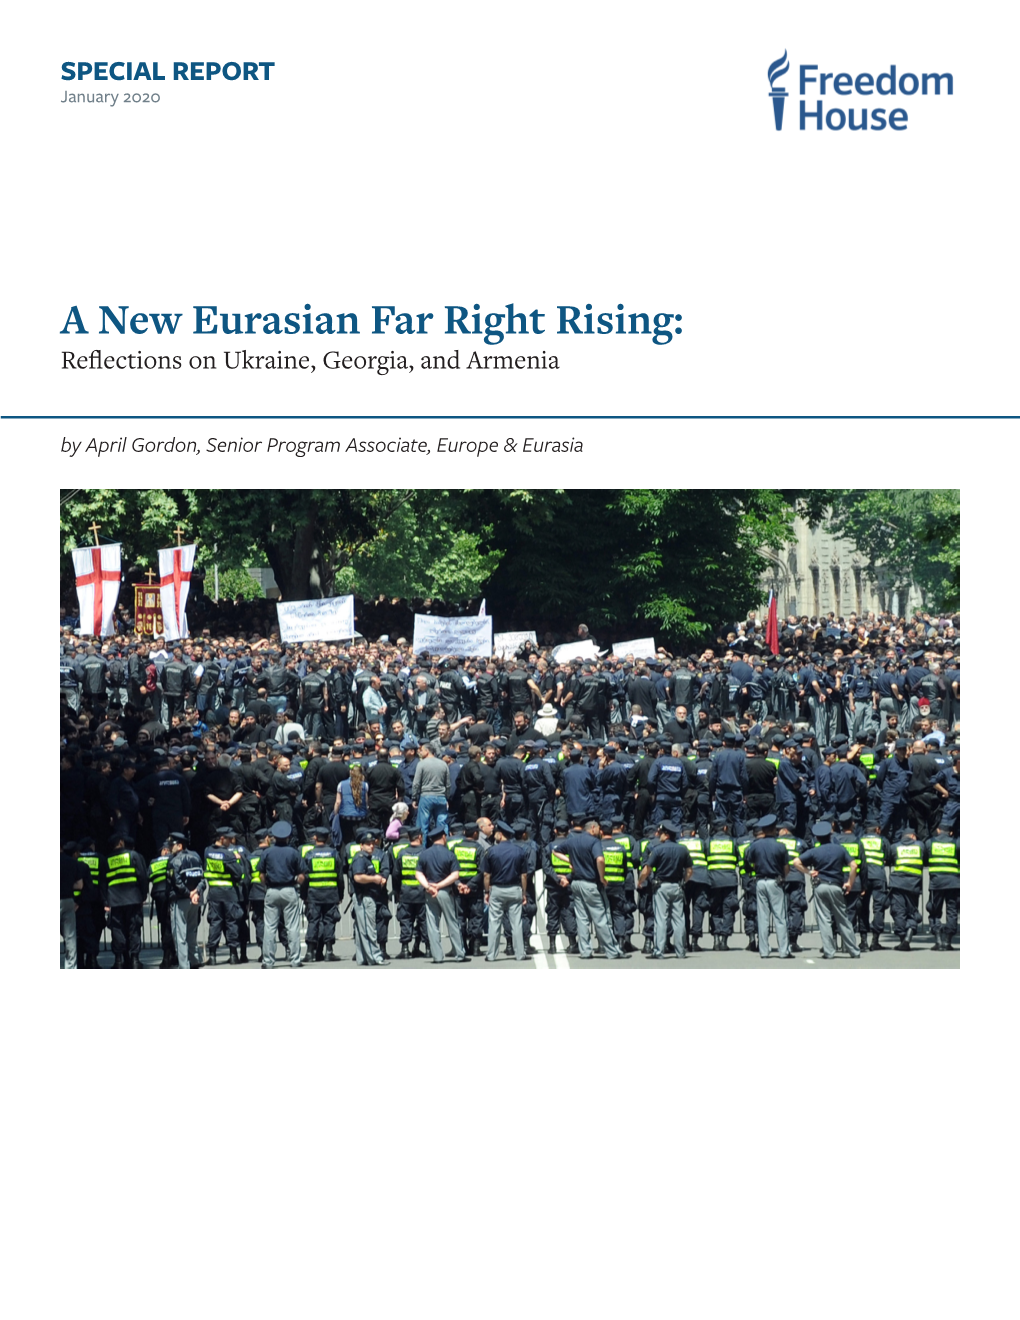 A New Eurasian Far Right Rising: Reflections on Ukraine, Georgia, and Armenia by April Gordon, Senior Program Associate, Europe & Eurasia SPECIAL REPORT January 2020